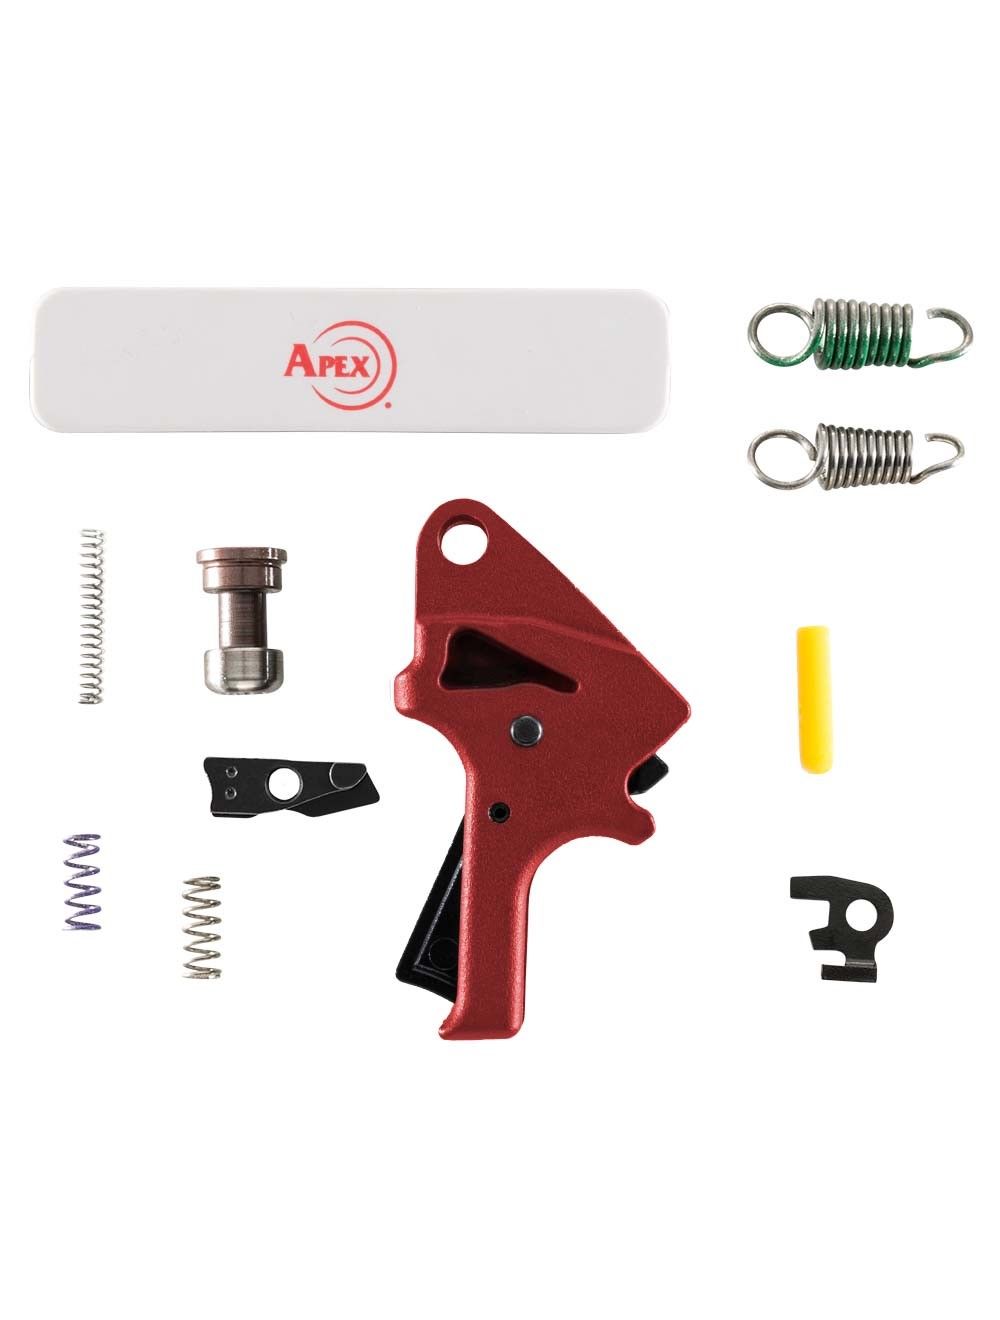 Polymer Flat-Faced Forward Set Trigger Kit for M&P M2.0